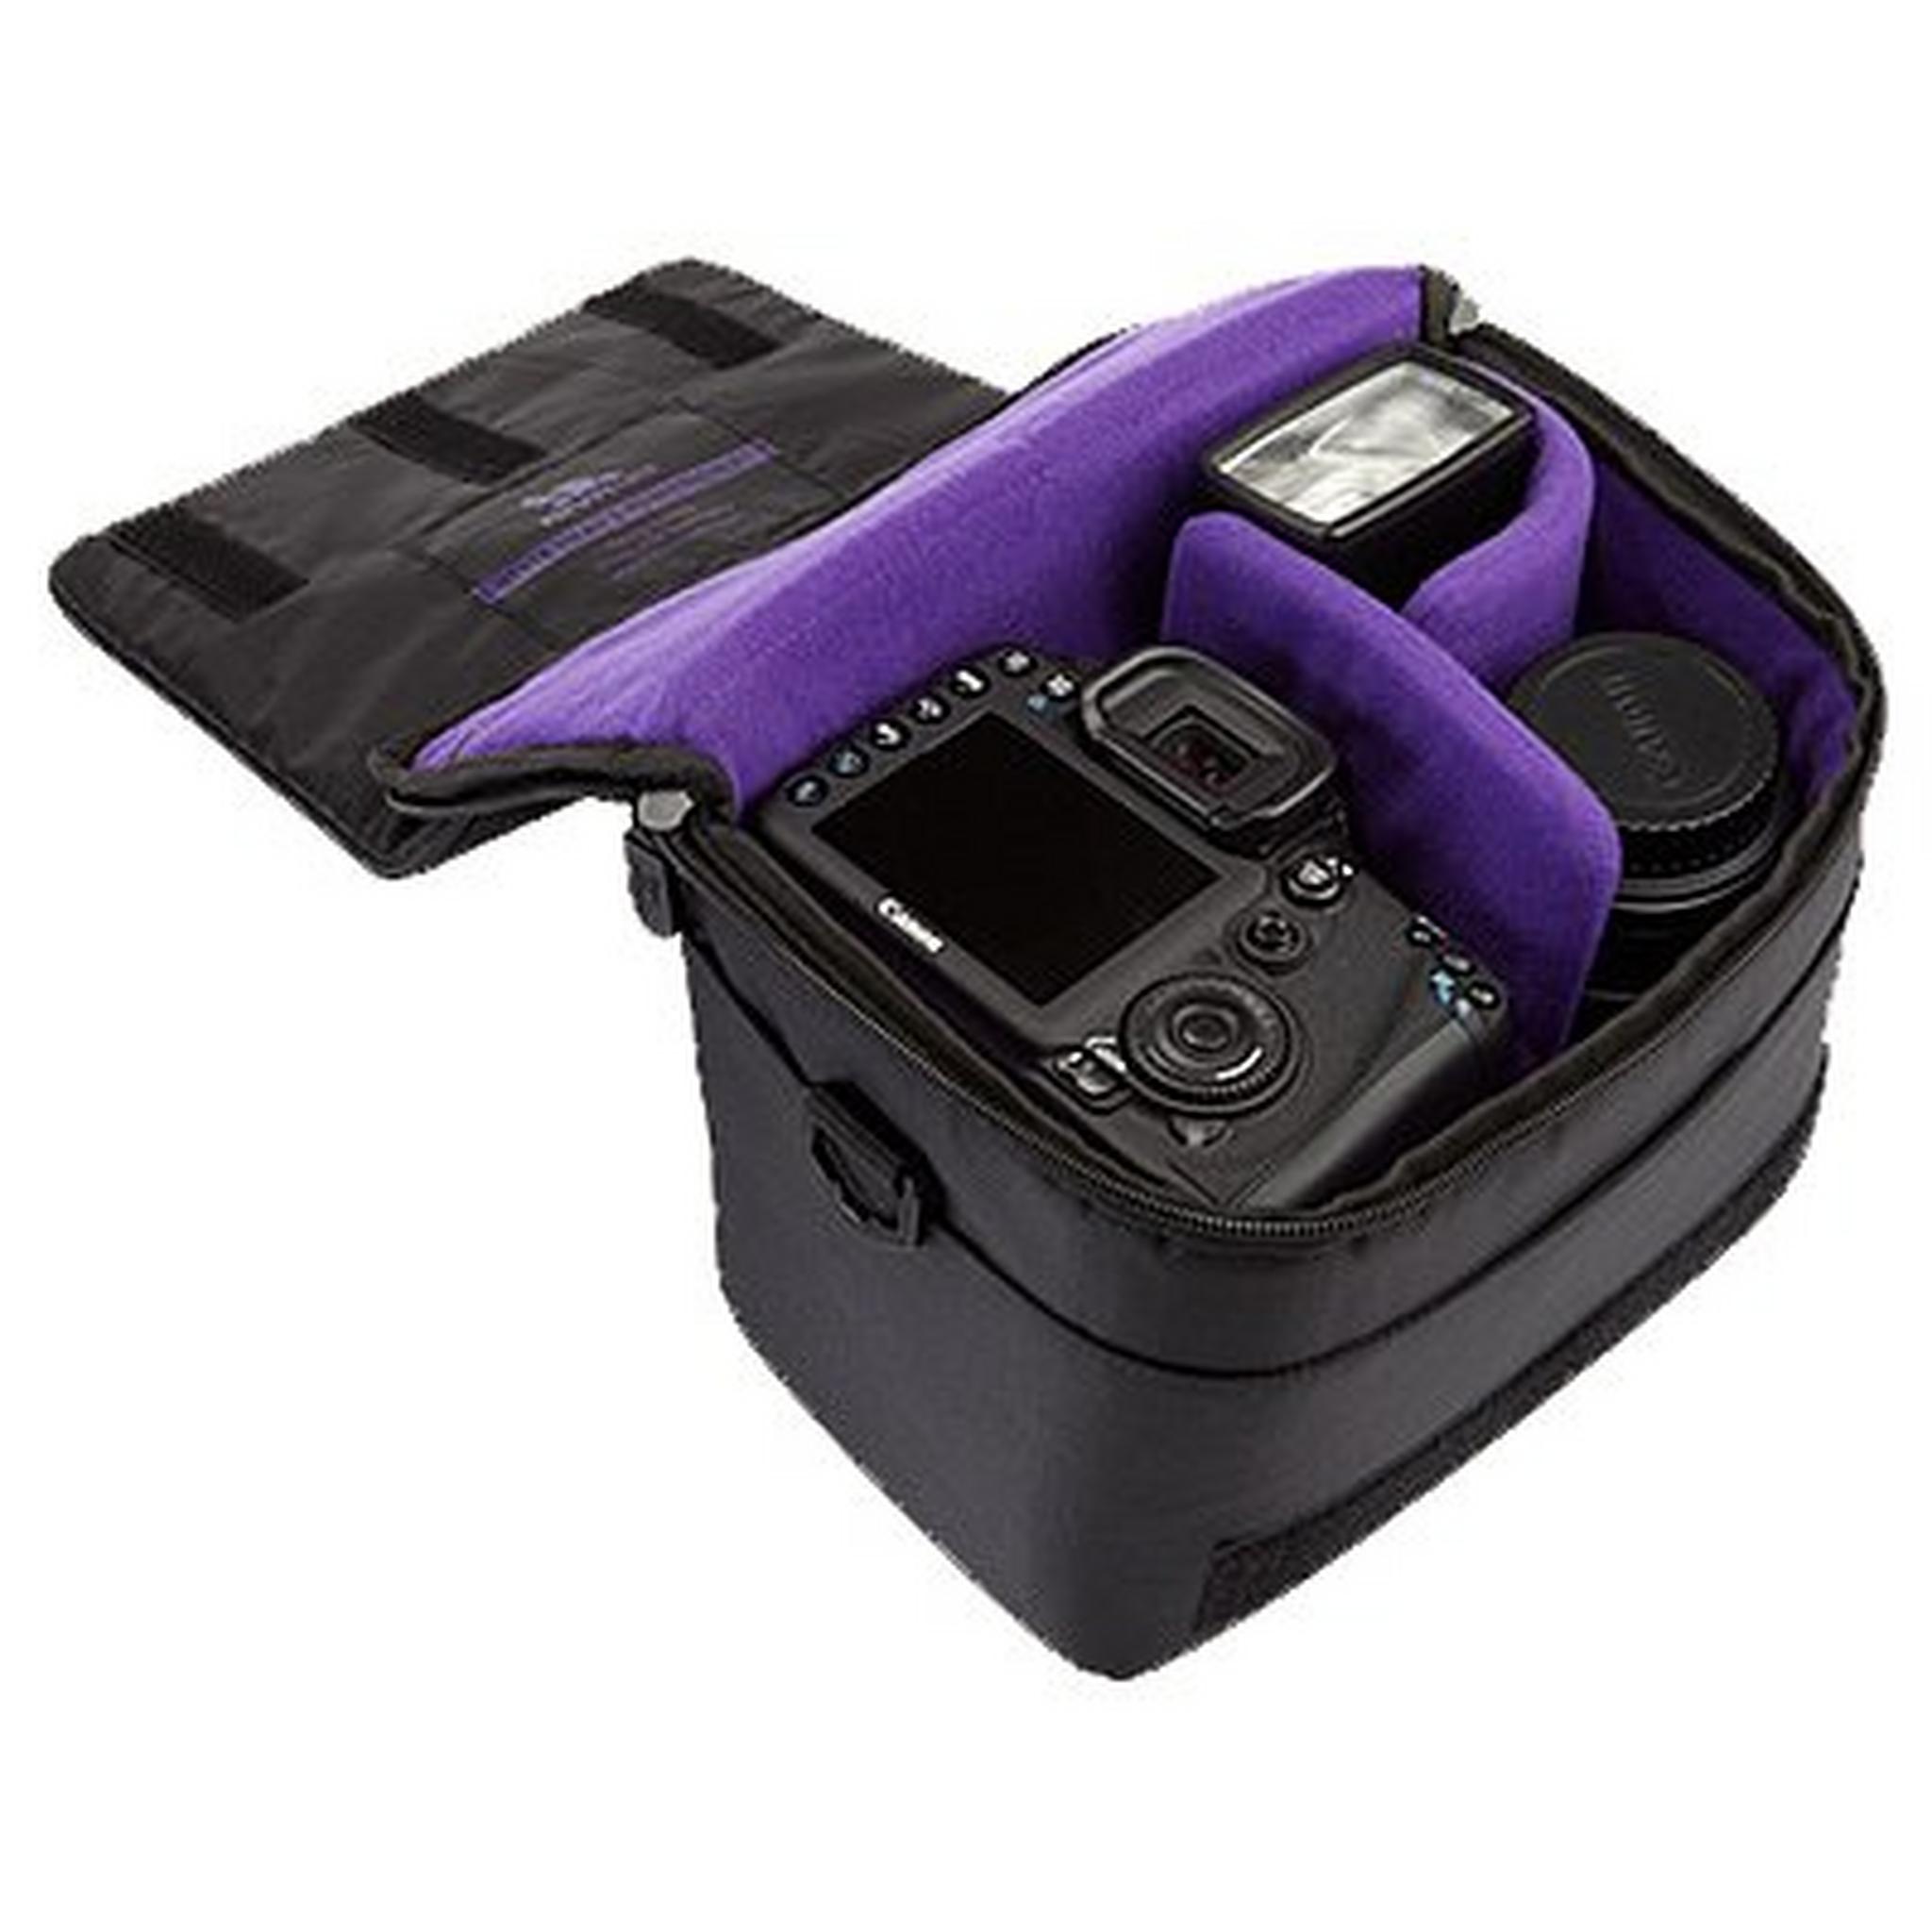 Riva Case 7303 (PS) SLR Camera Bag - Black